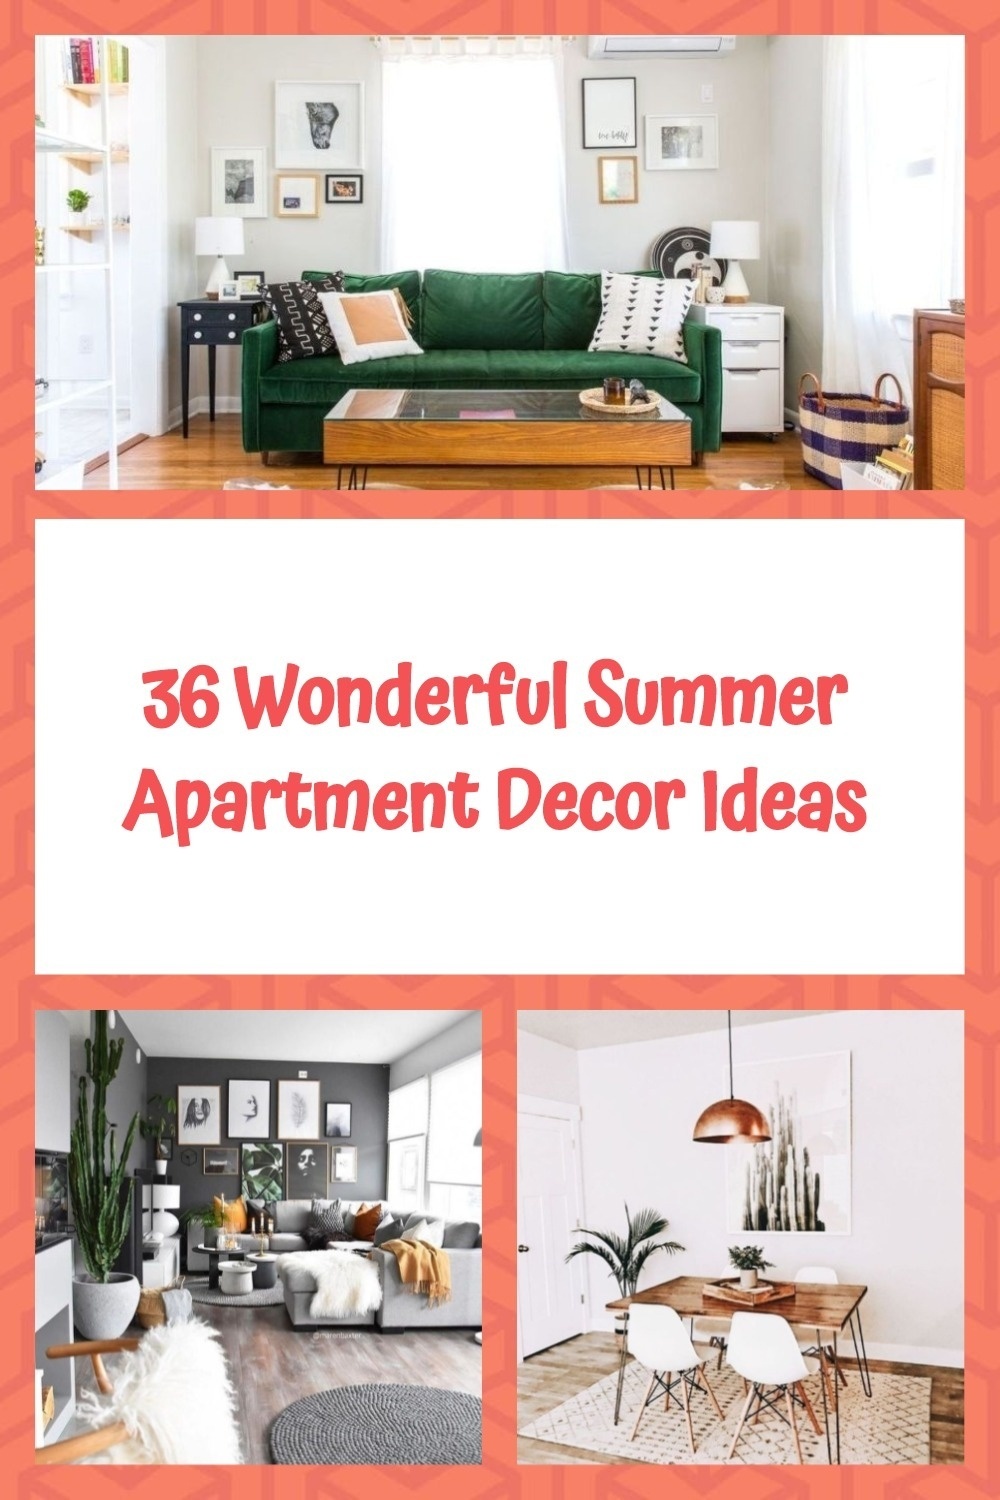 36 Wonderful Summer Apartment Decor Ideas